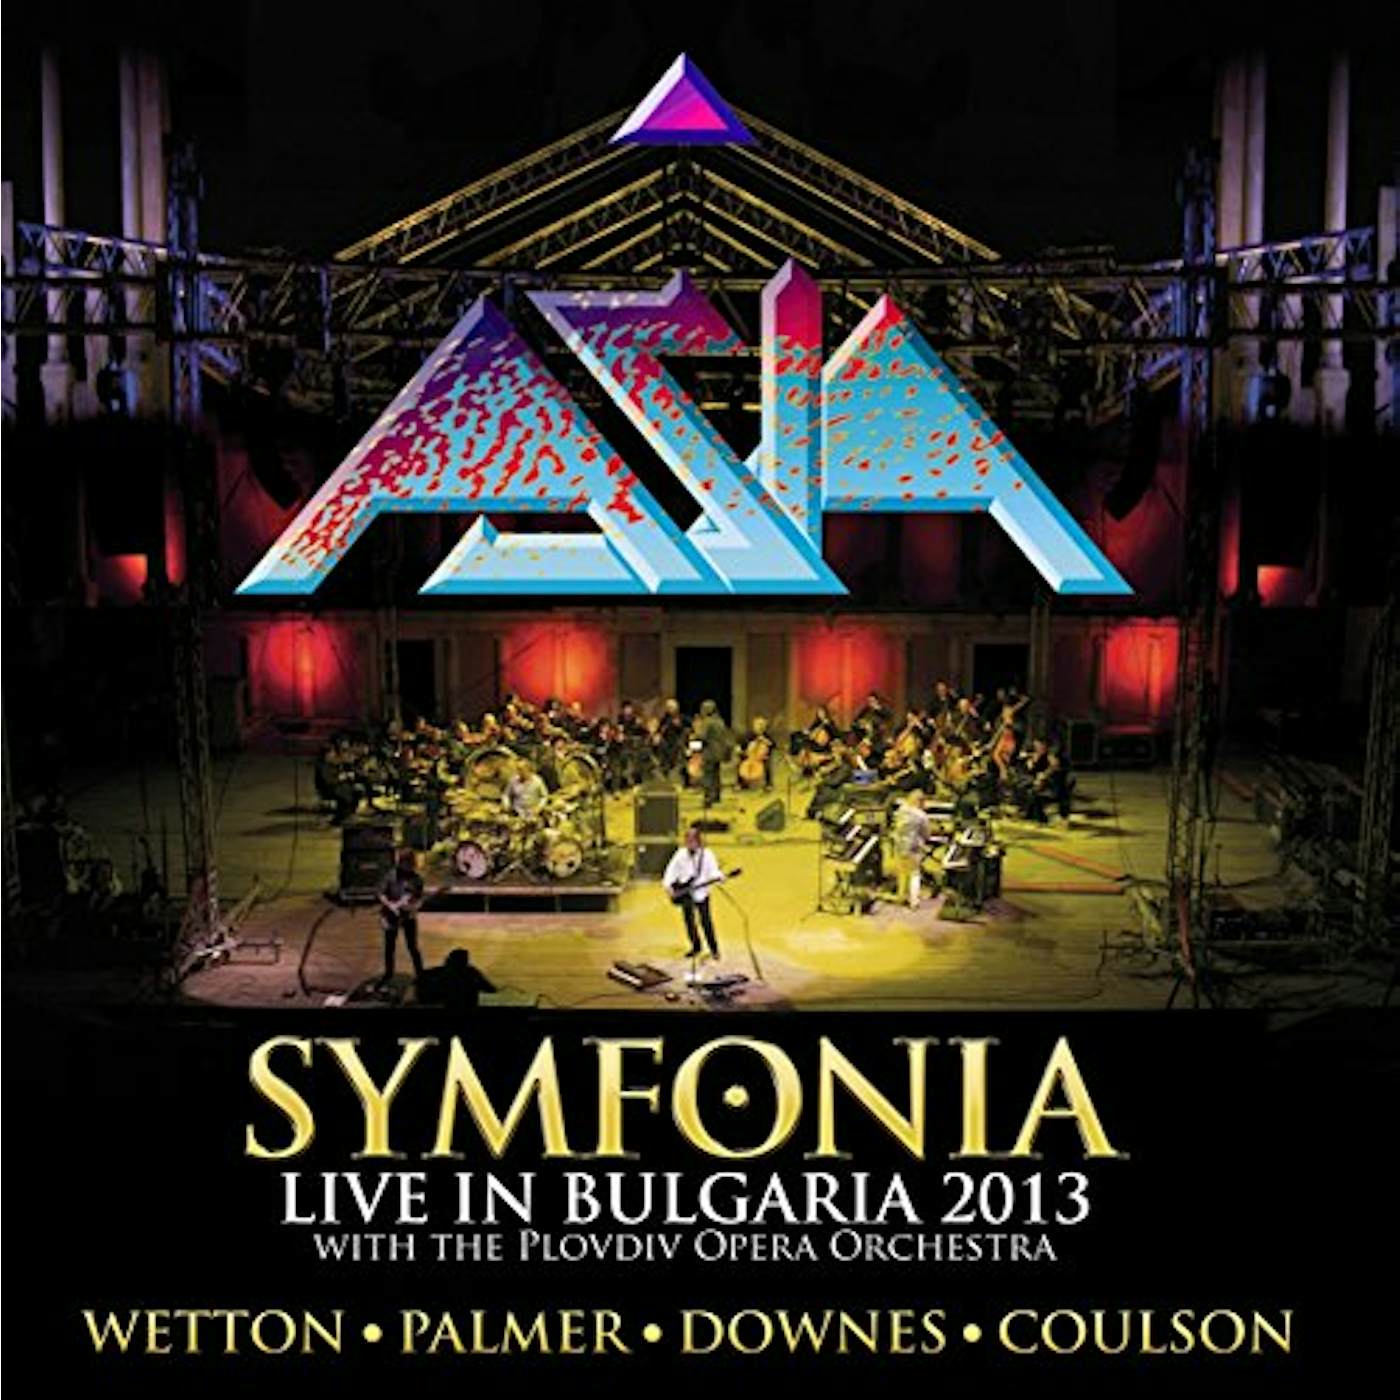 Asia Symfonia - Live in Bulgaria 2013 Vinyl Record